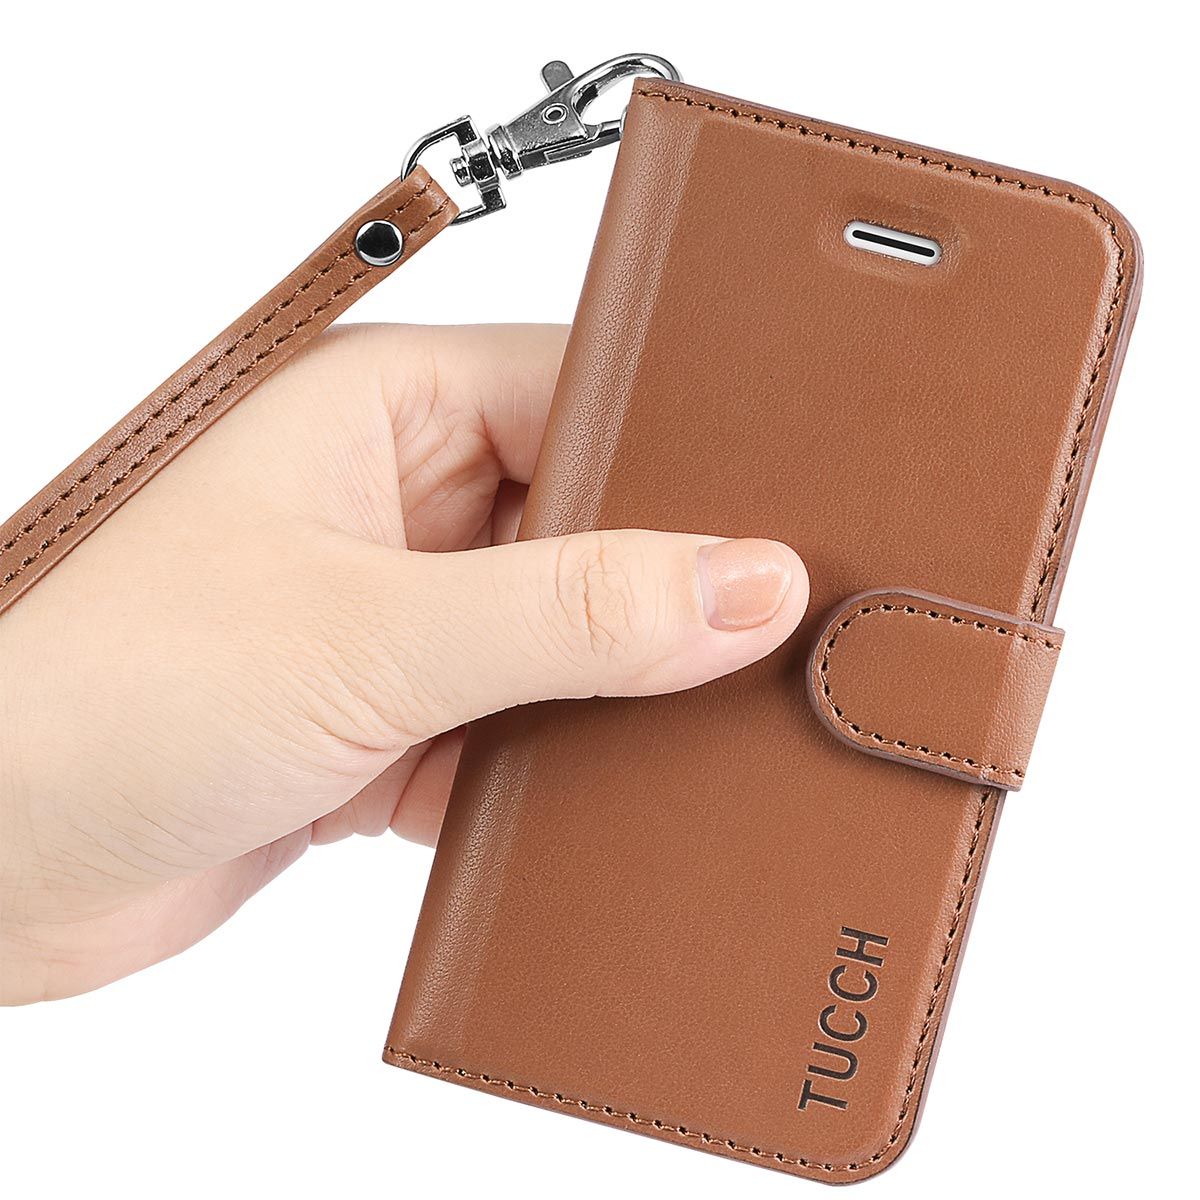 TUCCH iPhone 5/5S/SE Case, Premium Leather Wallet Case, Wrist Strap